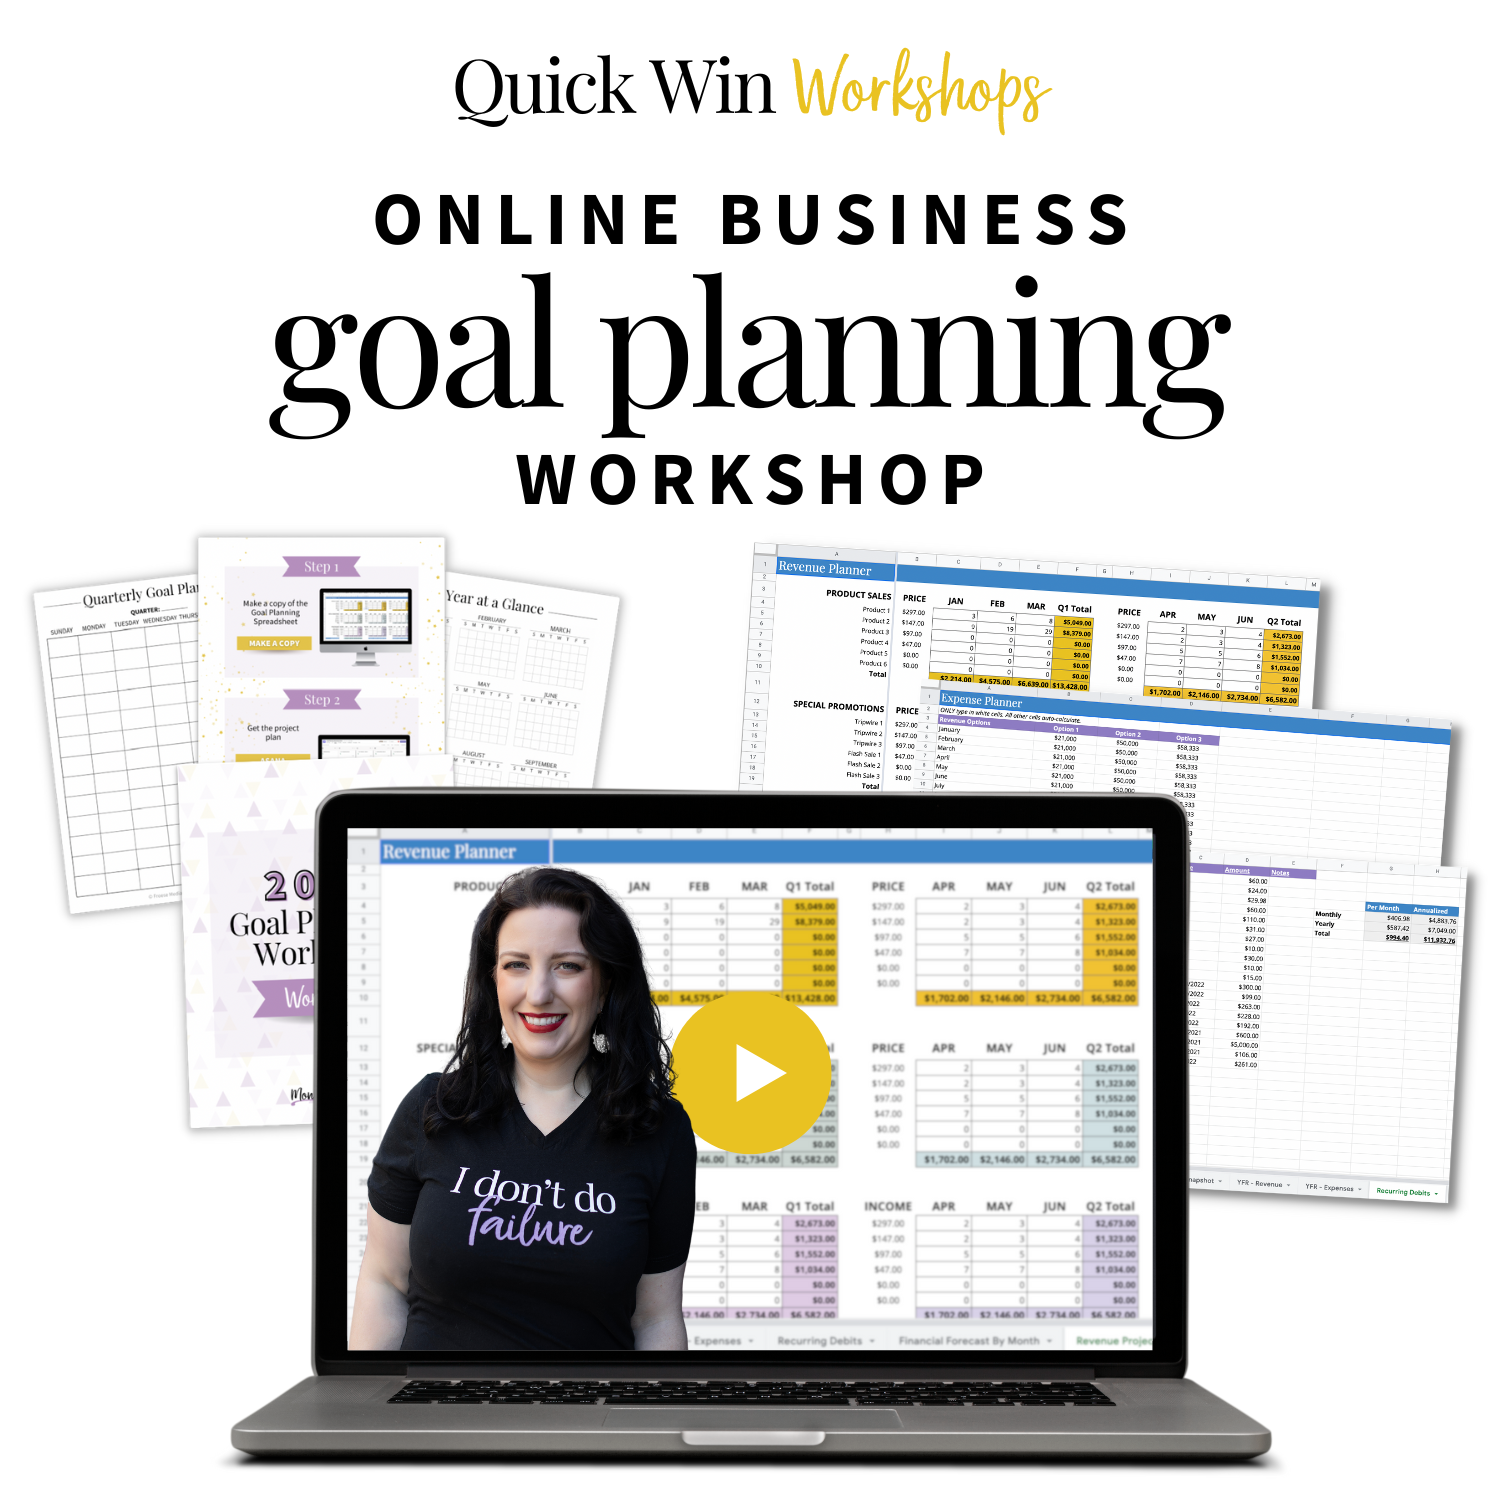 Quick Win Workshop: Online Business Goal Planning Workshop